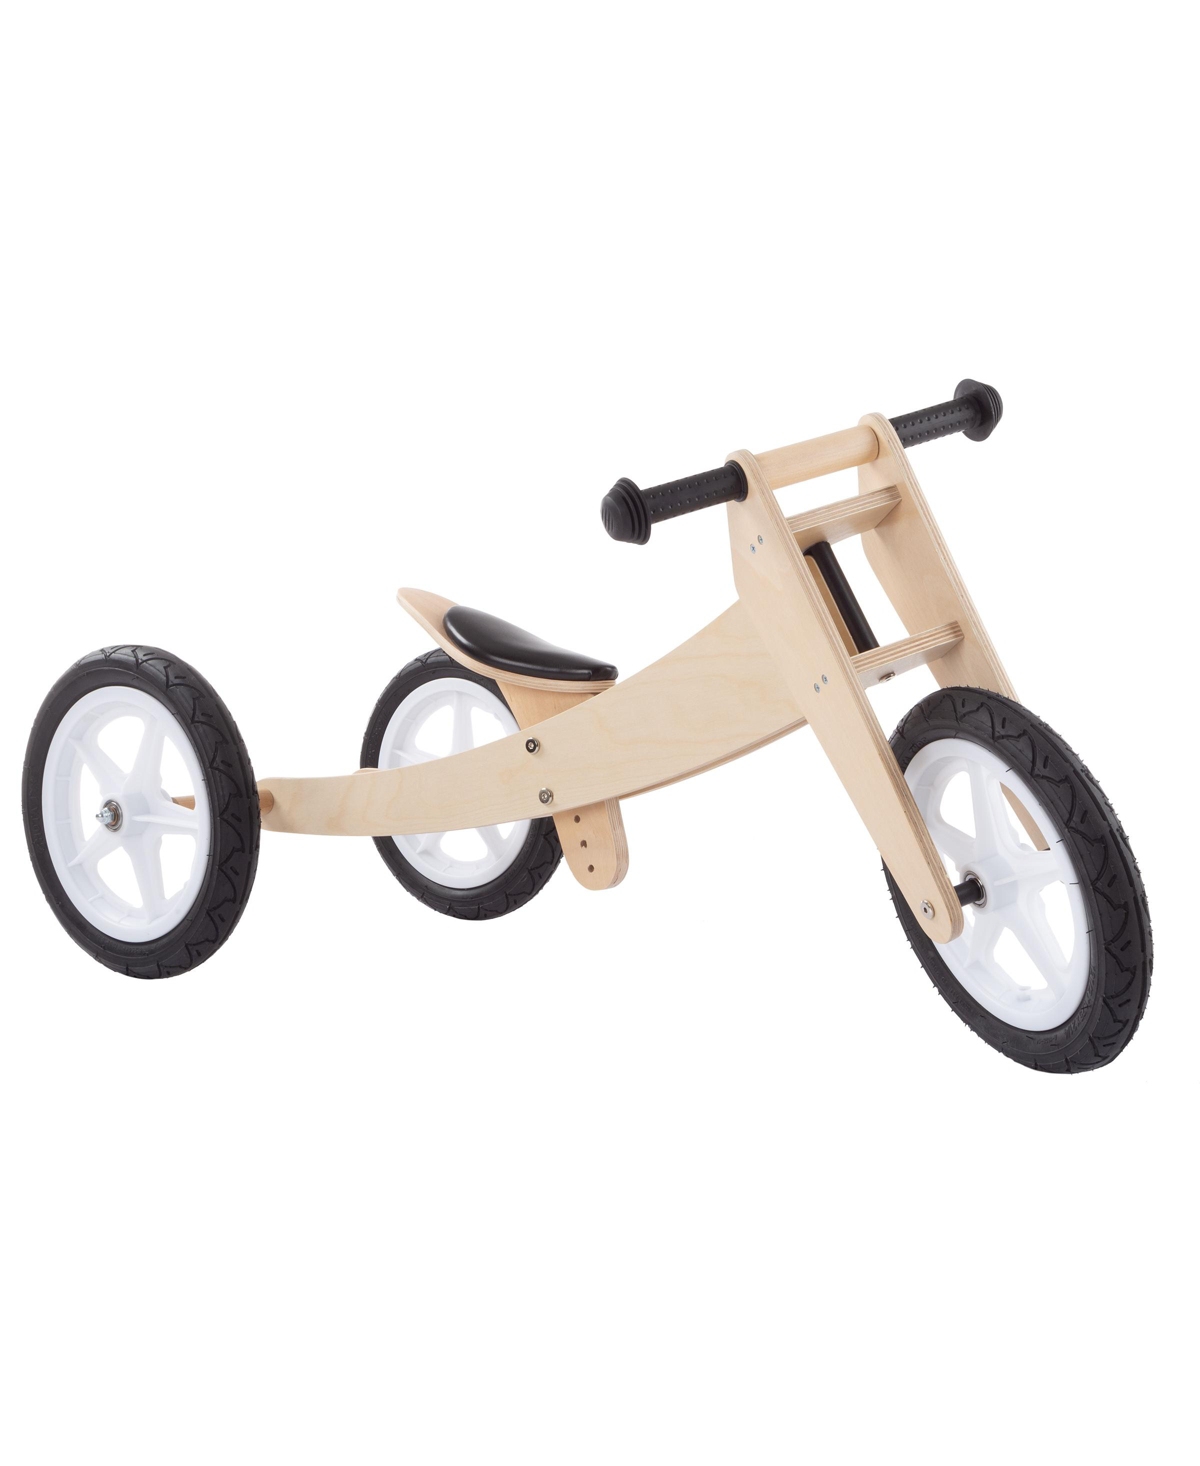 Lil' Rider 3-in-1 Balance Bike In Wood